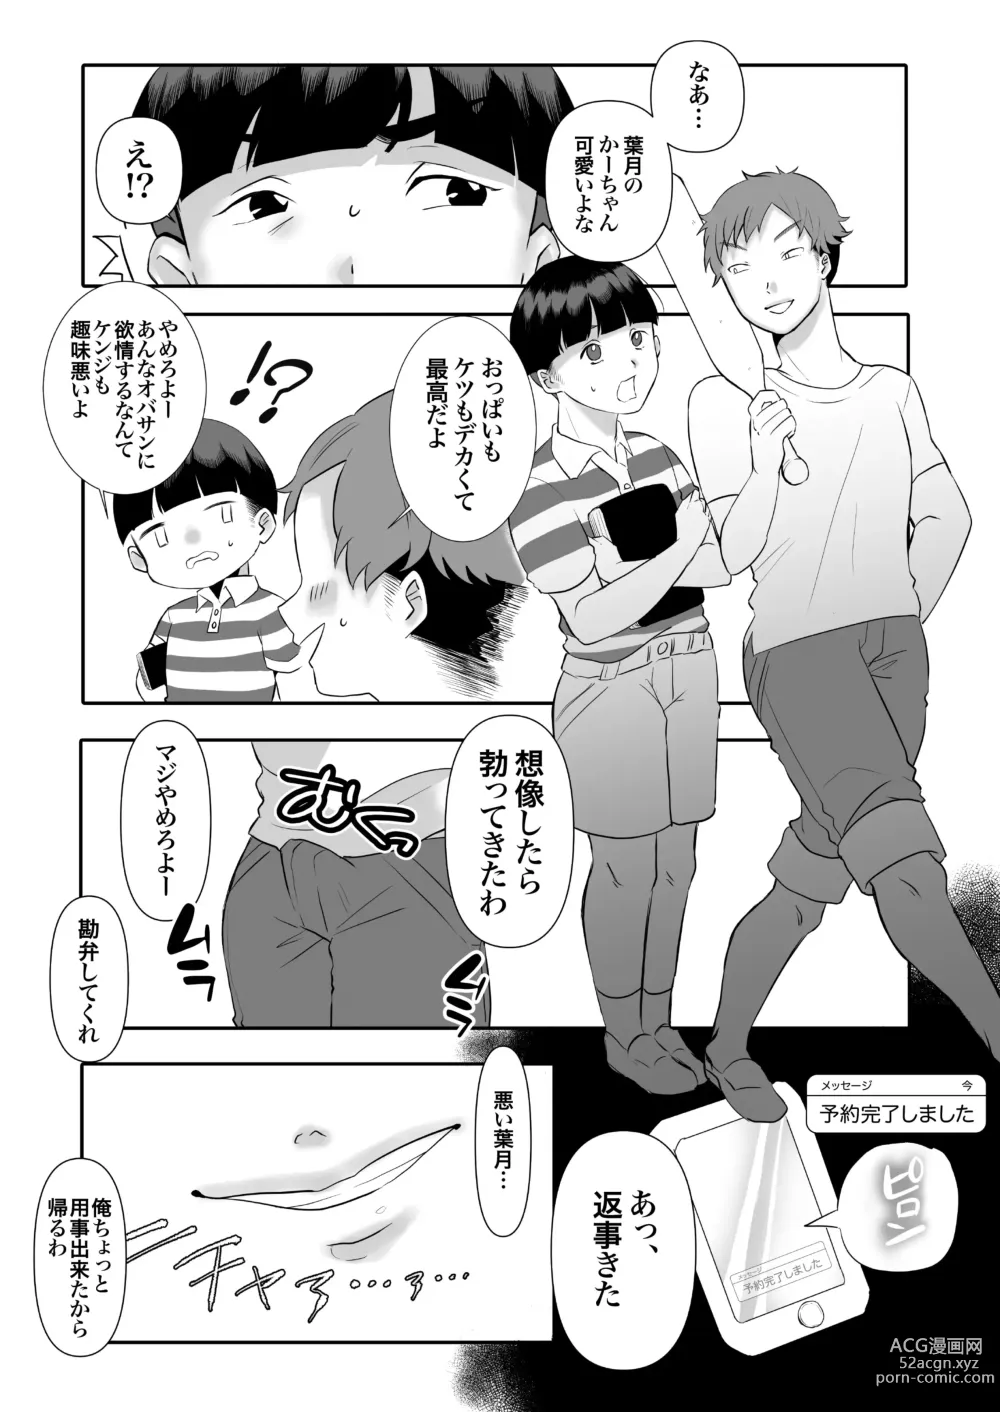 Page 7 of doujinshi DeliHeal Yondara Tomodachi no Kaa-chan ga Kita.